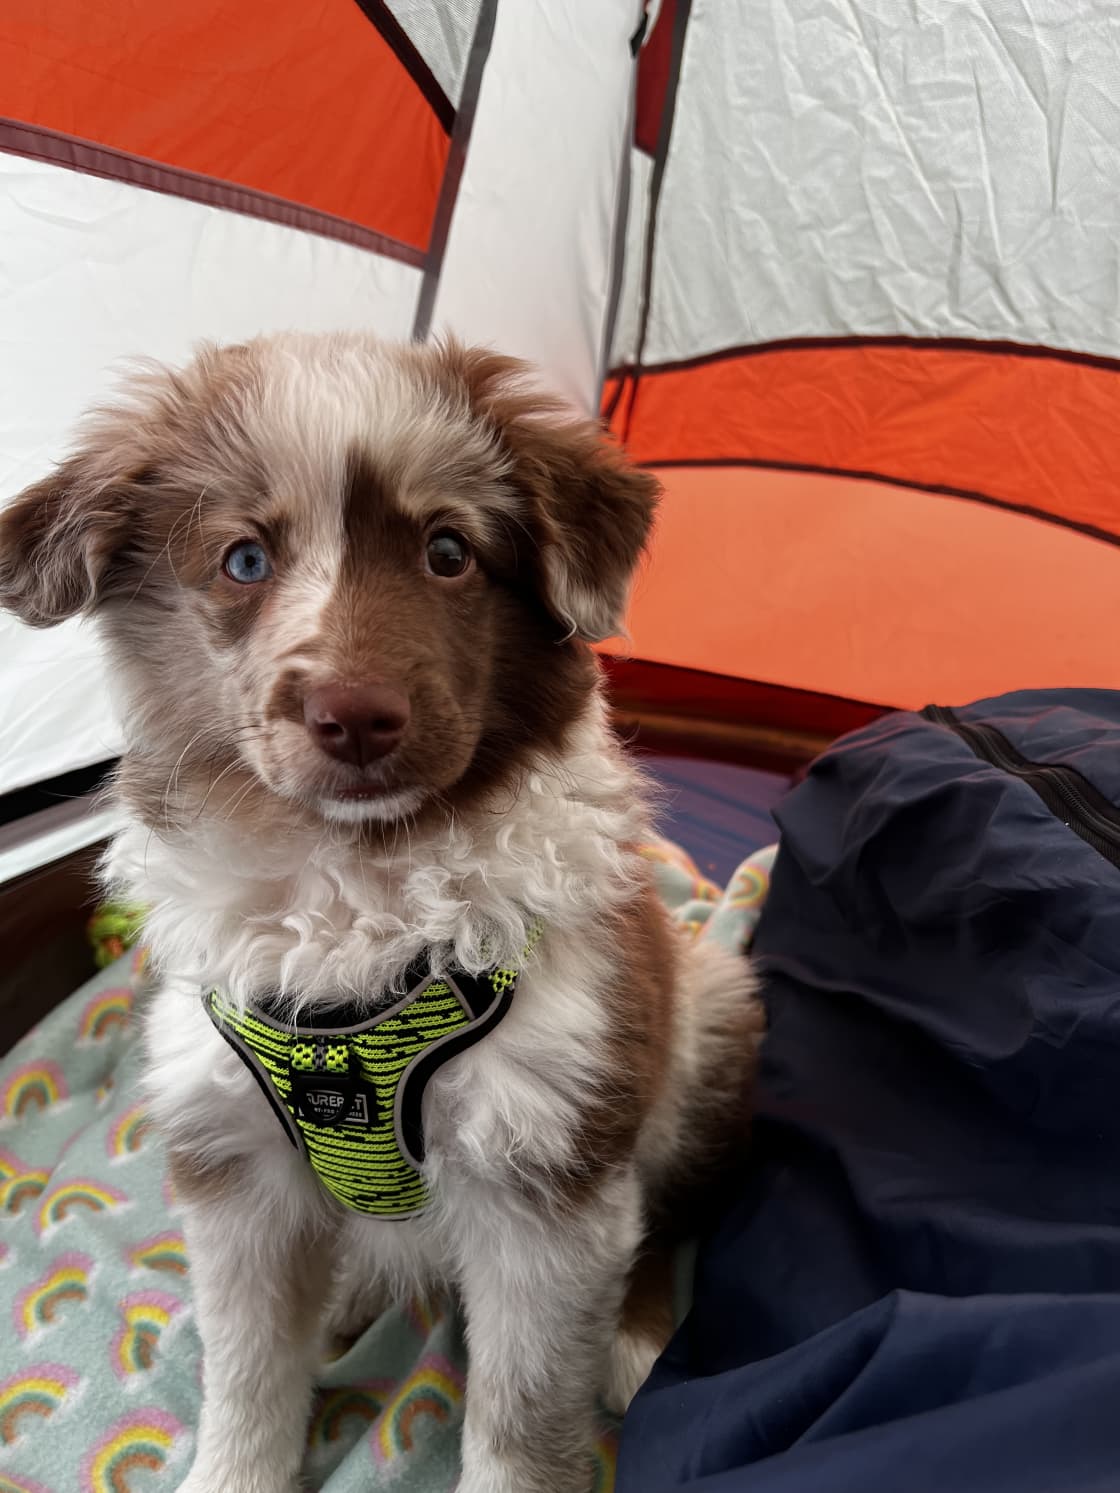 My dog enjoying the tent. 
